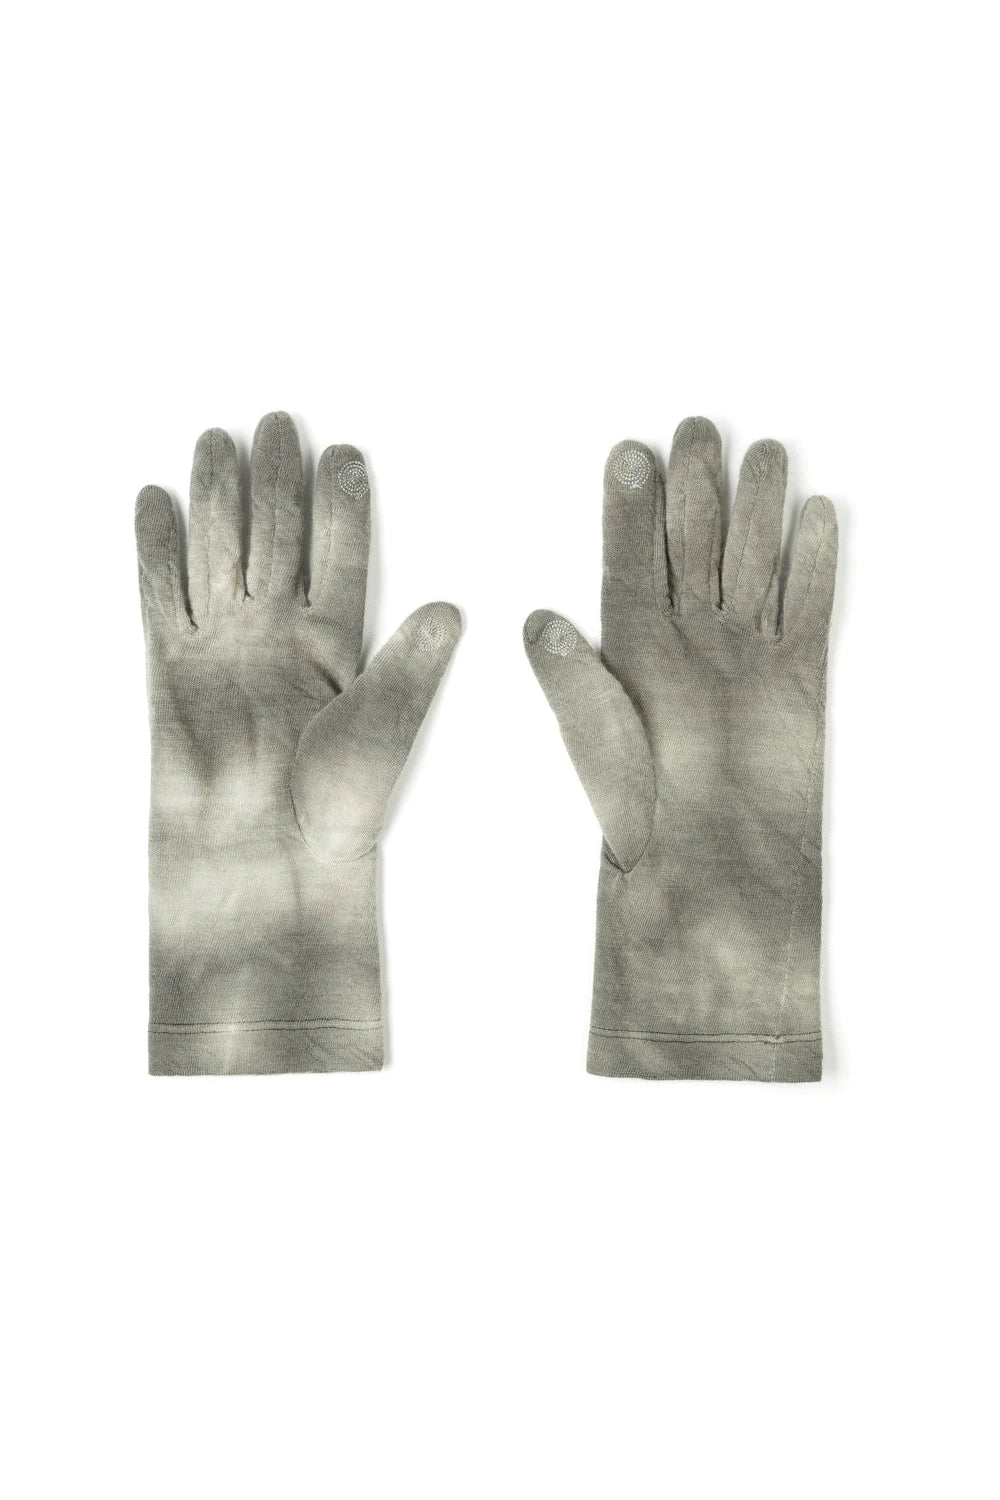 Satisfy CloudMerino™ Liner Gloves - Batik Steel